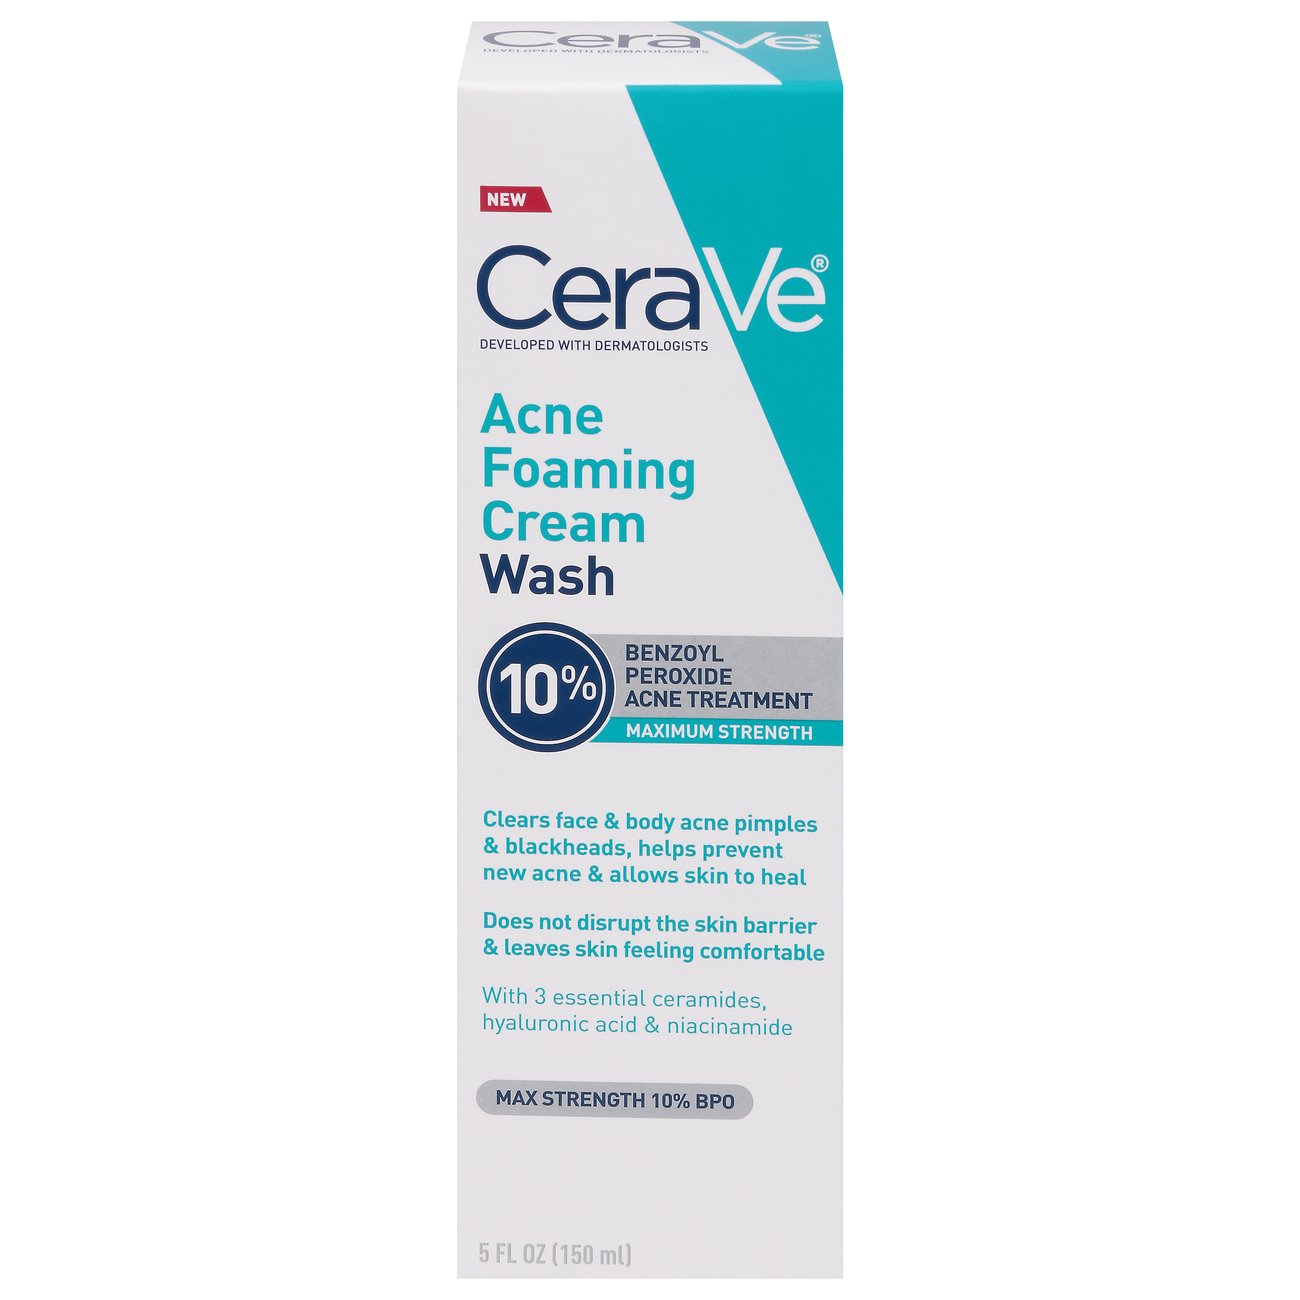 CeraVe Acne Foaming Cream Wash - Shop Facial Cleansers & Scrubs at H-E-B